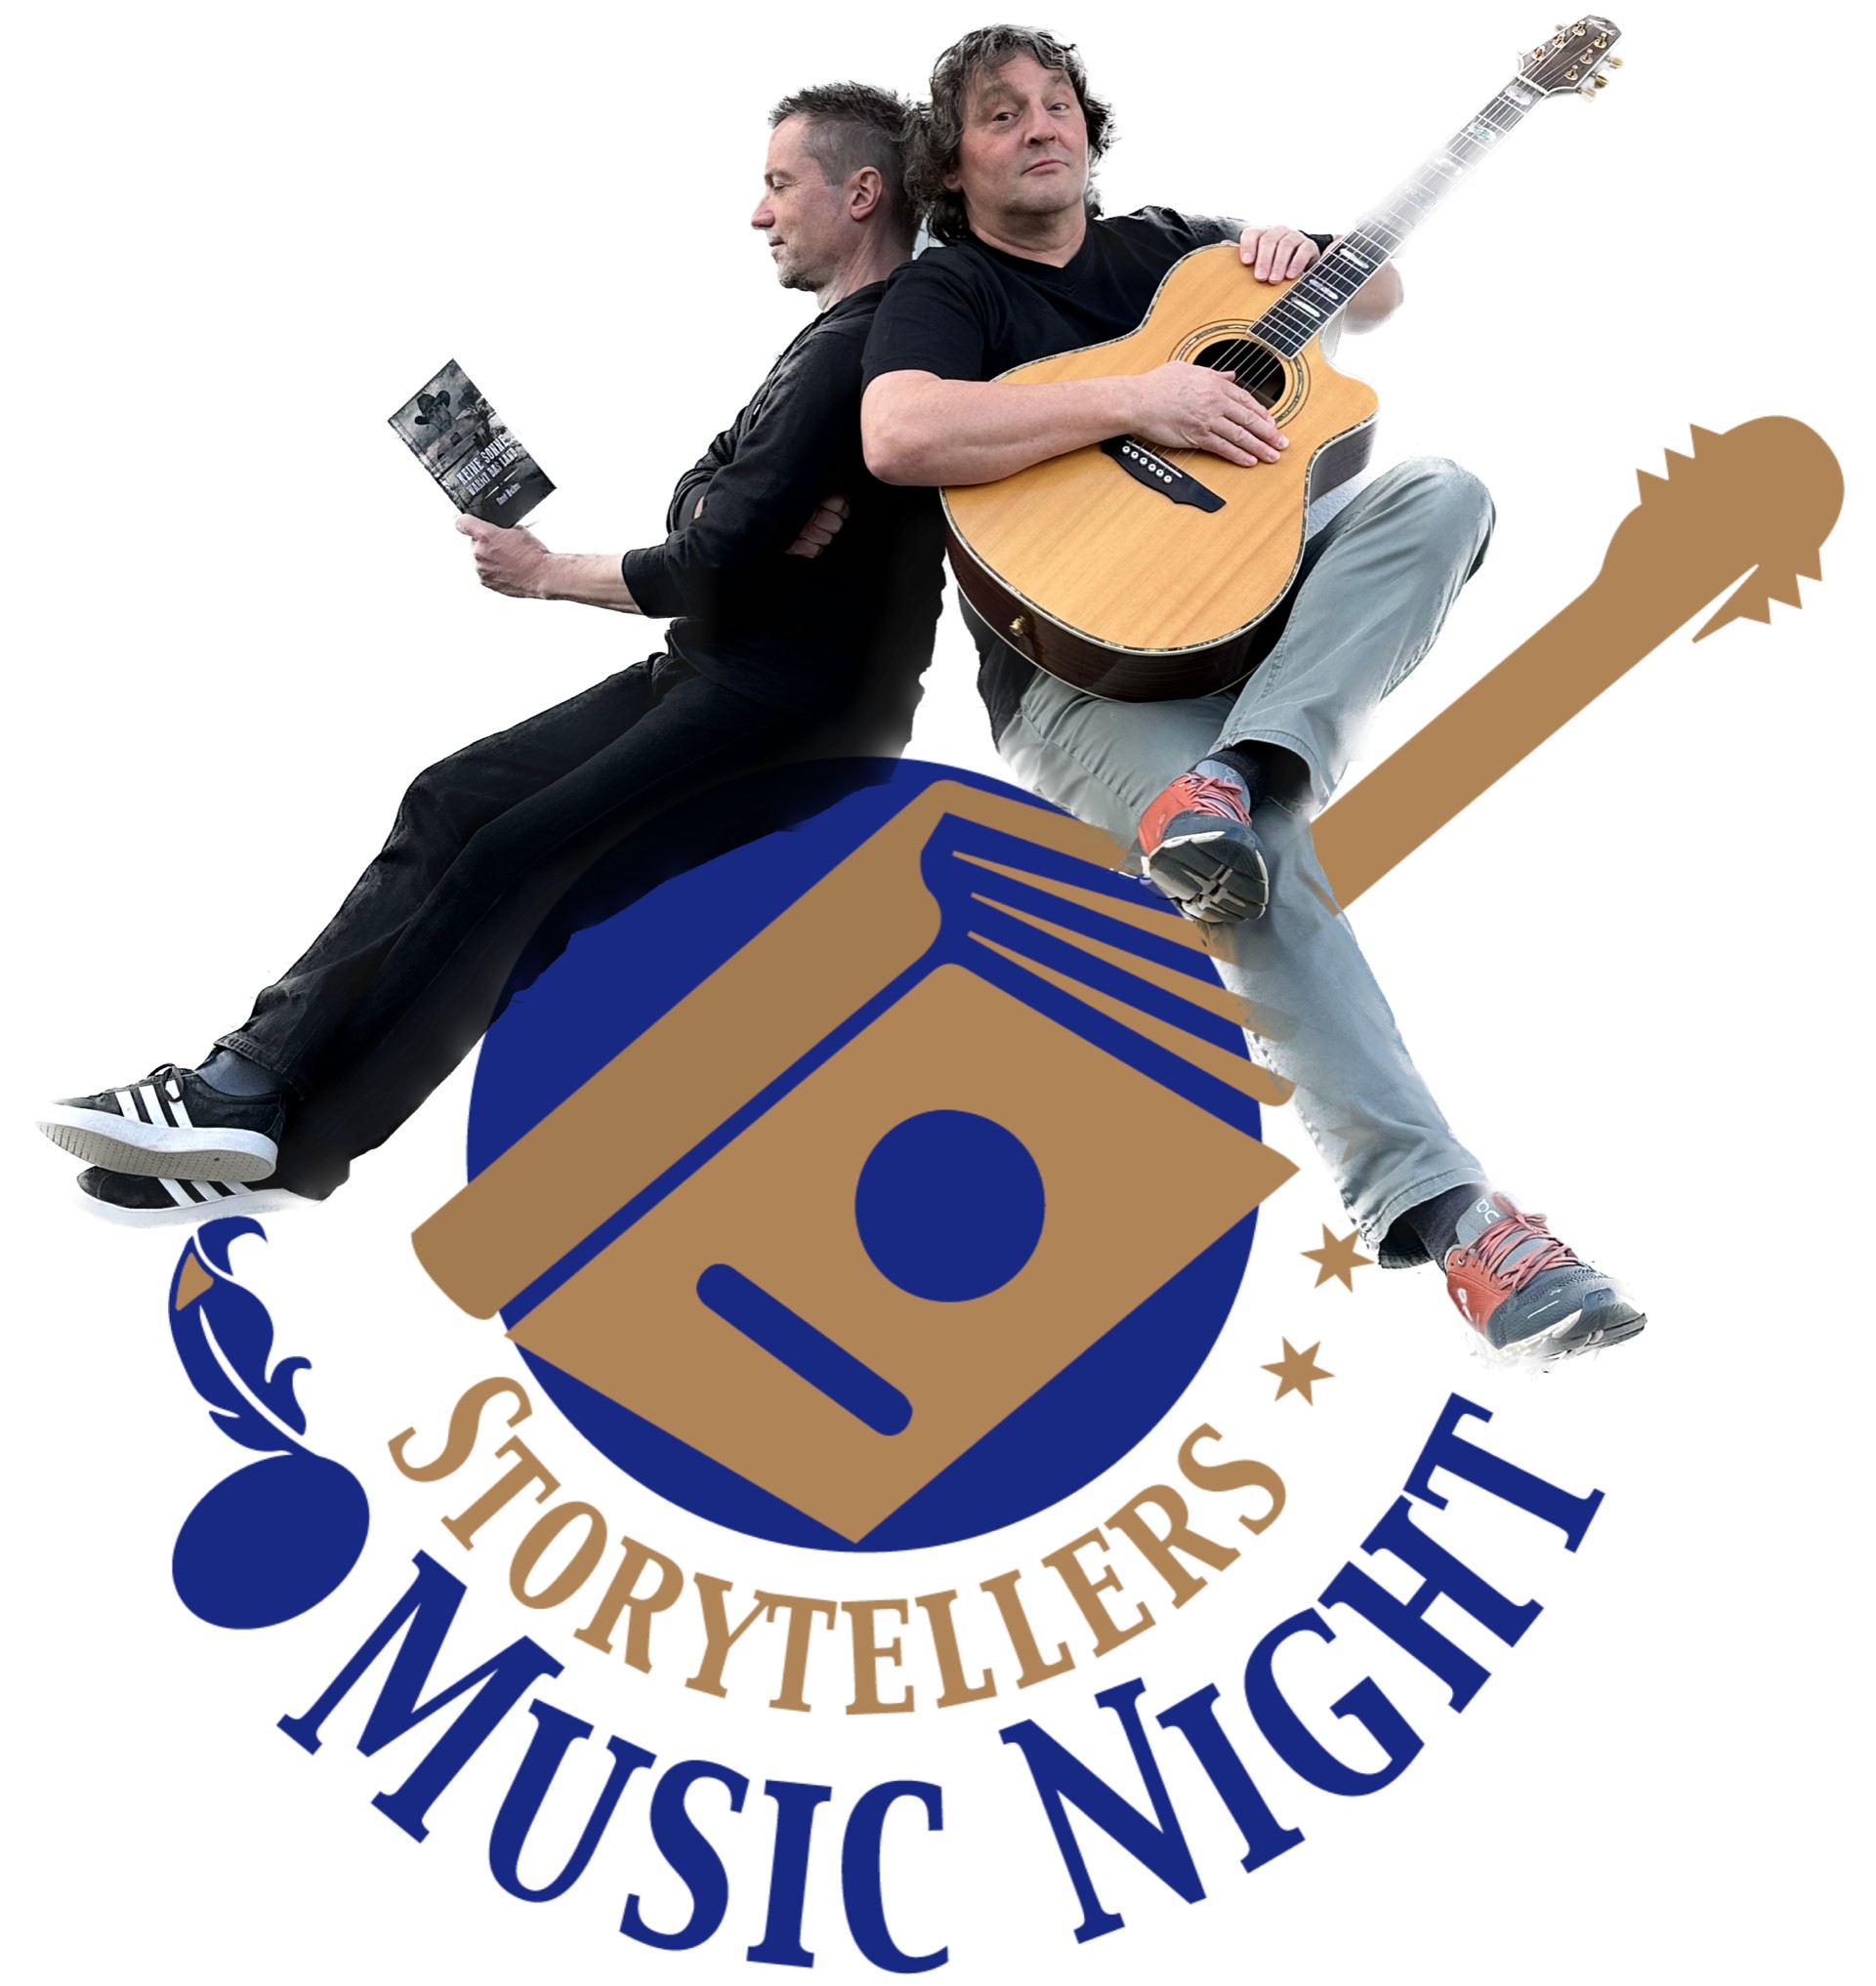 Storytellers Music Night